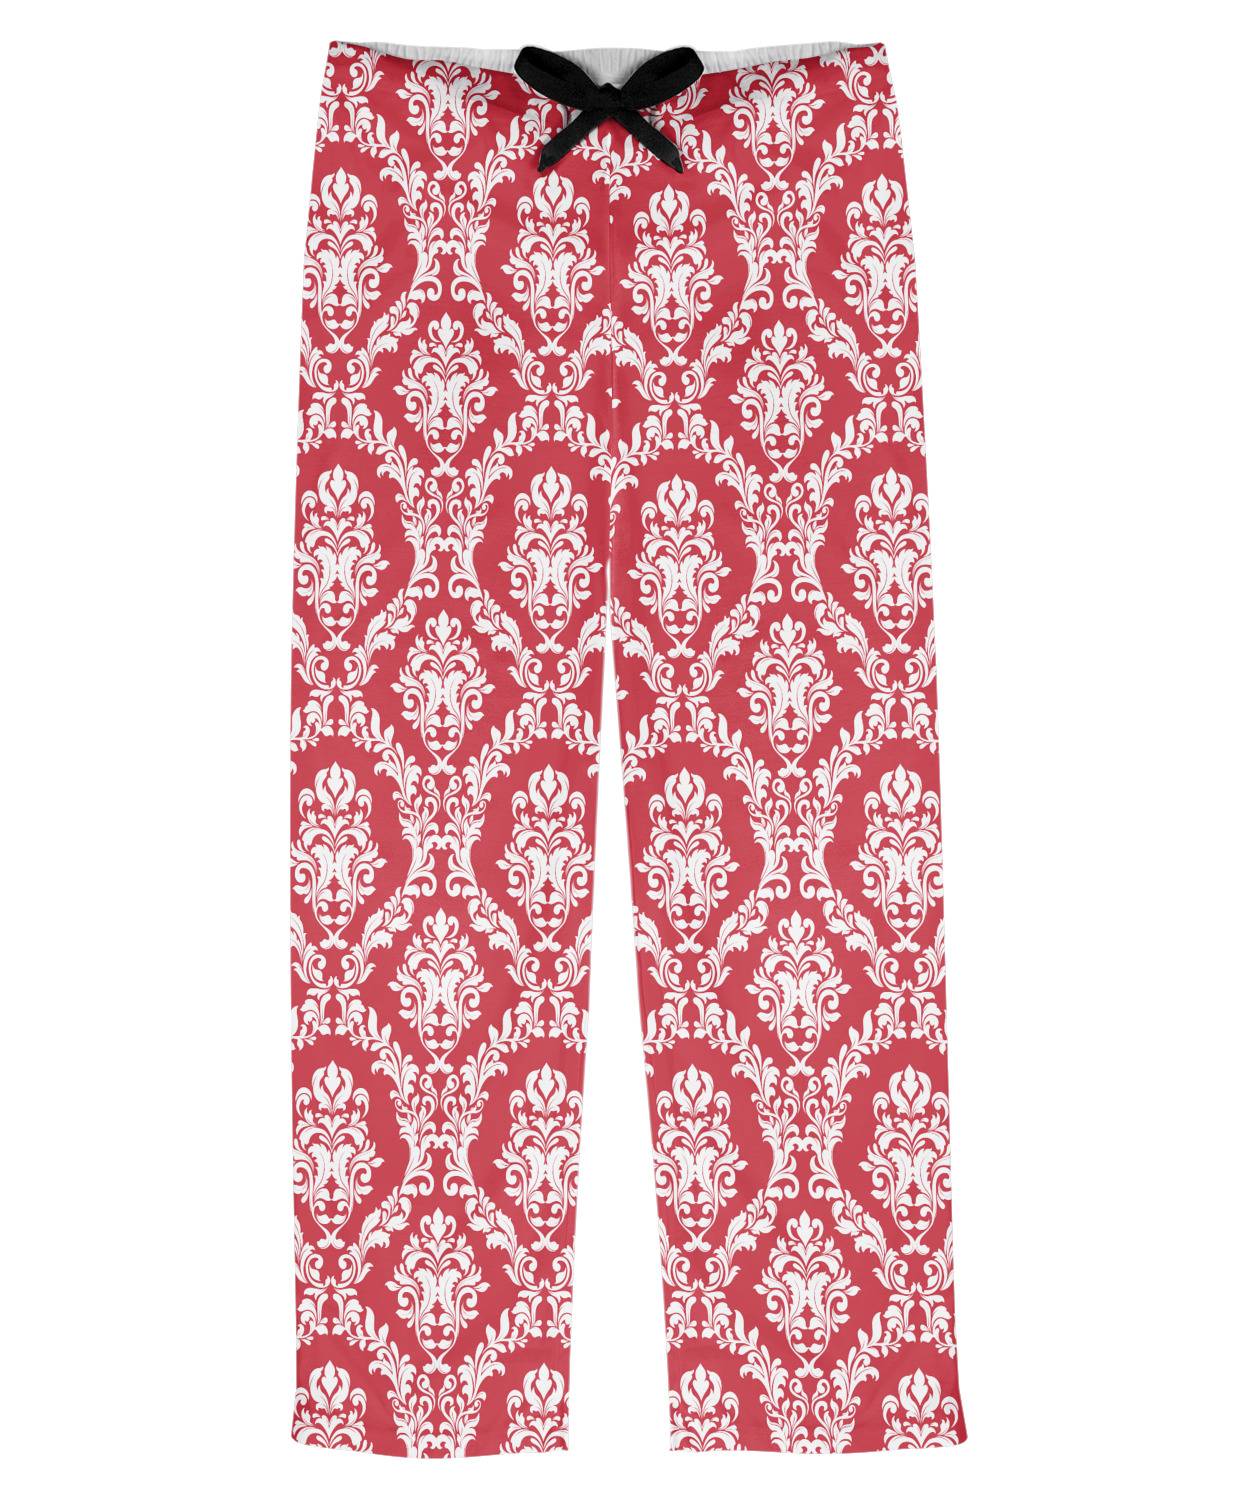 Damask Mens Pajama Pants - 2XL (Personalized) - YouCustomizeIt